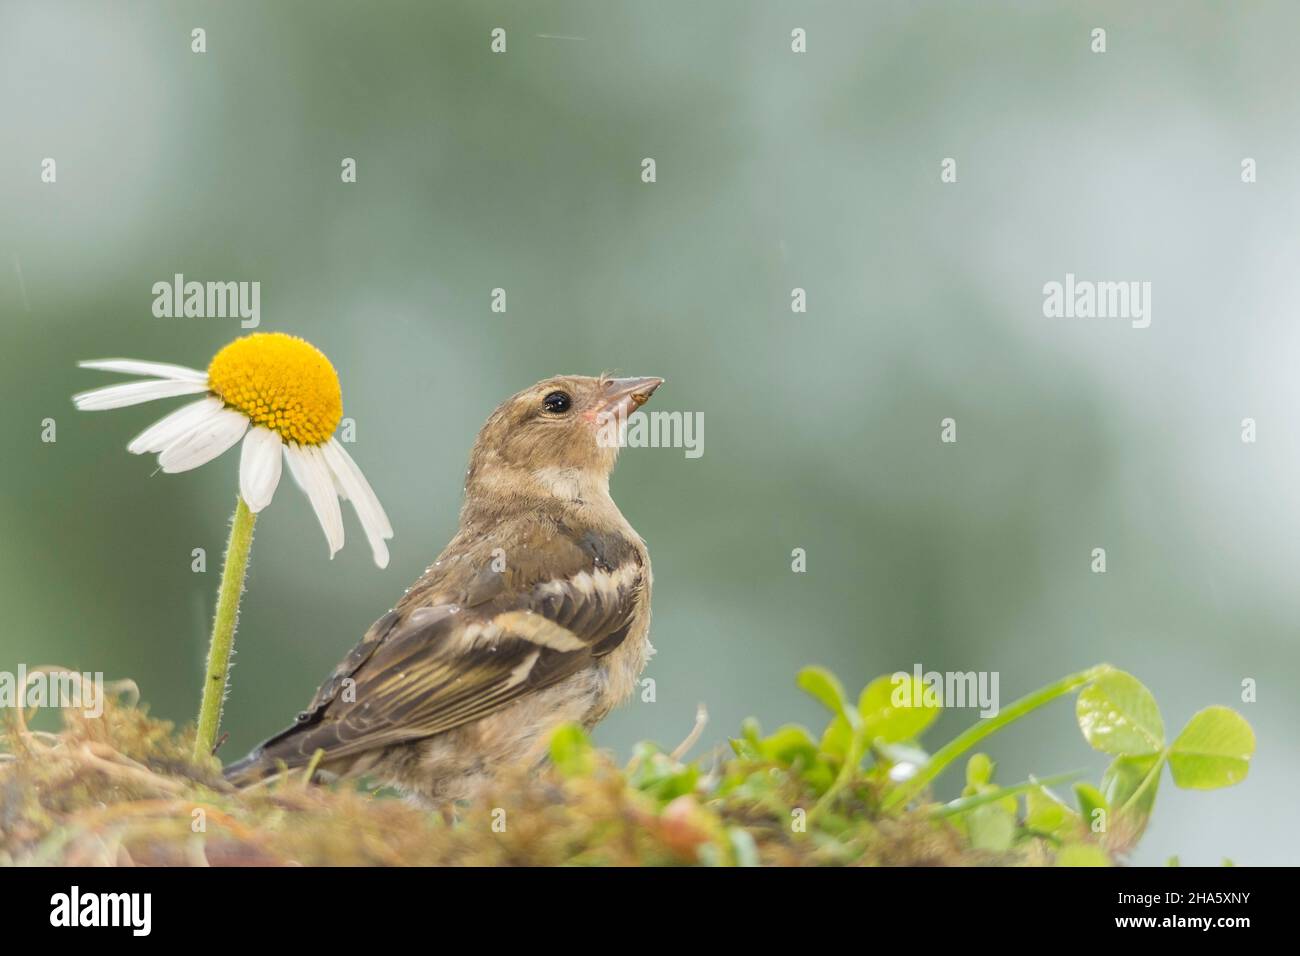 young bullfinch standing between flowers while raining Stock Photo